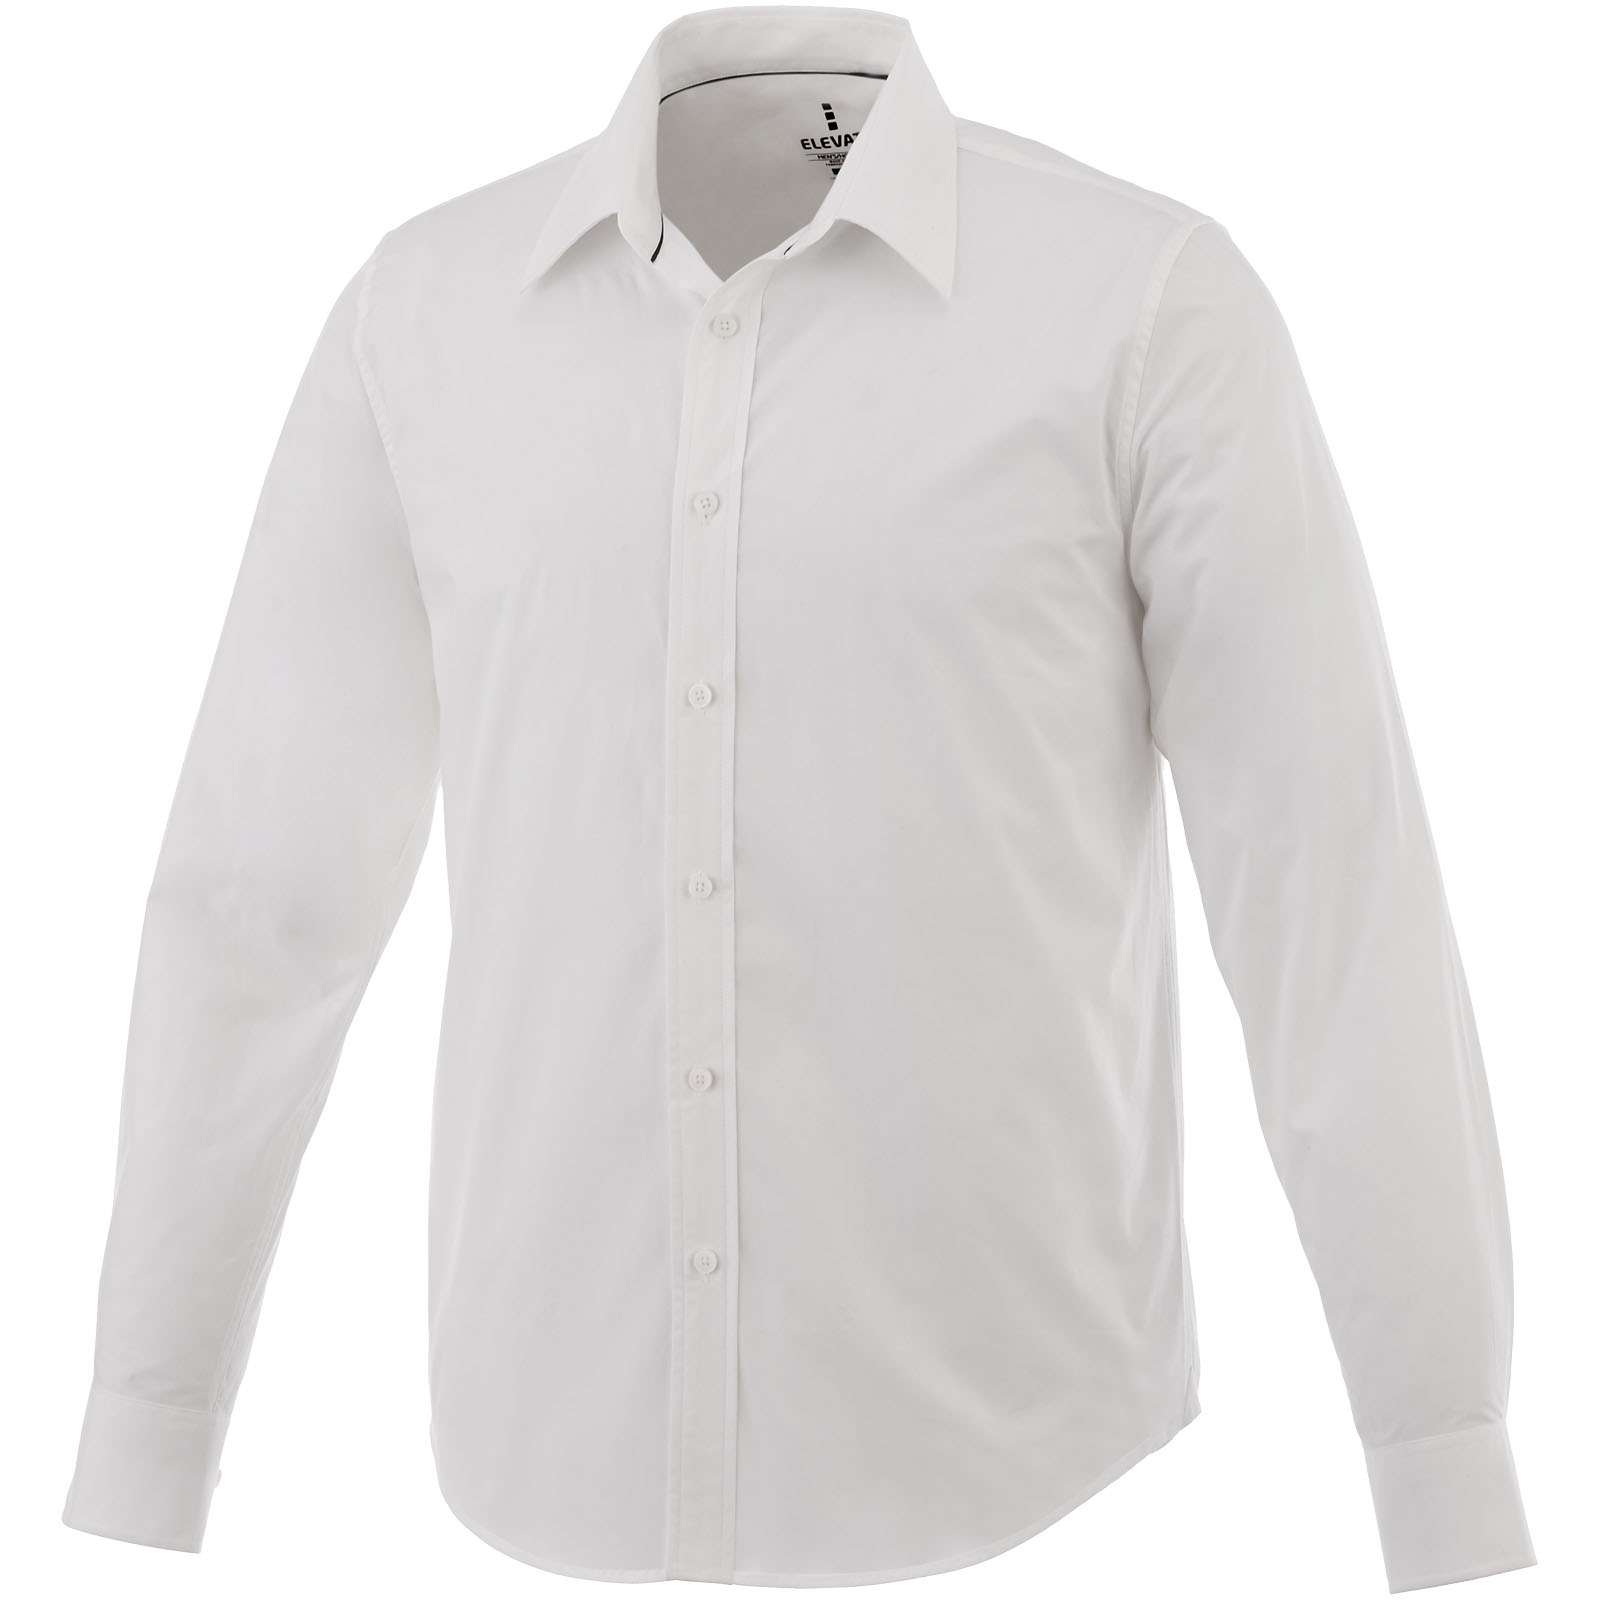 Advertising Shirts - Hamell long sleeve men's shirt